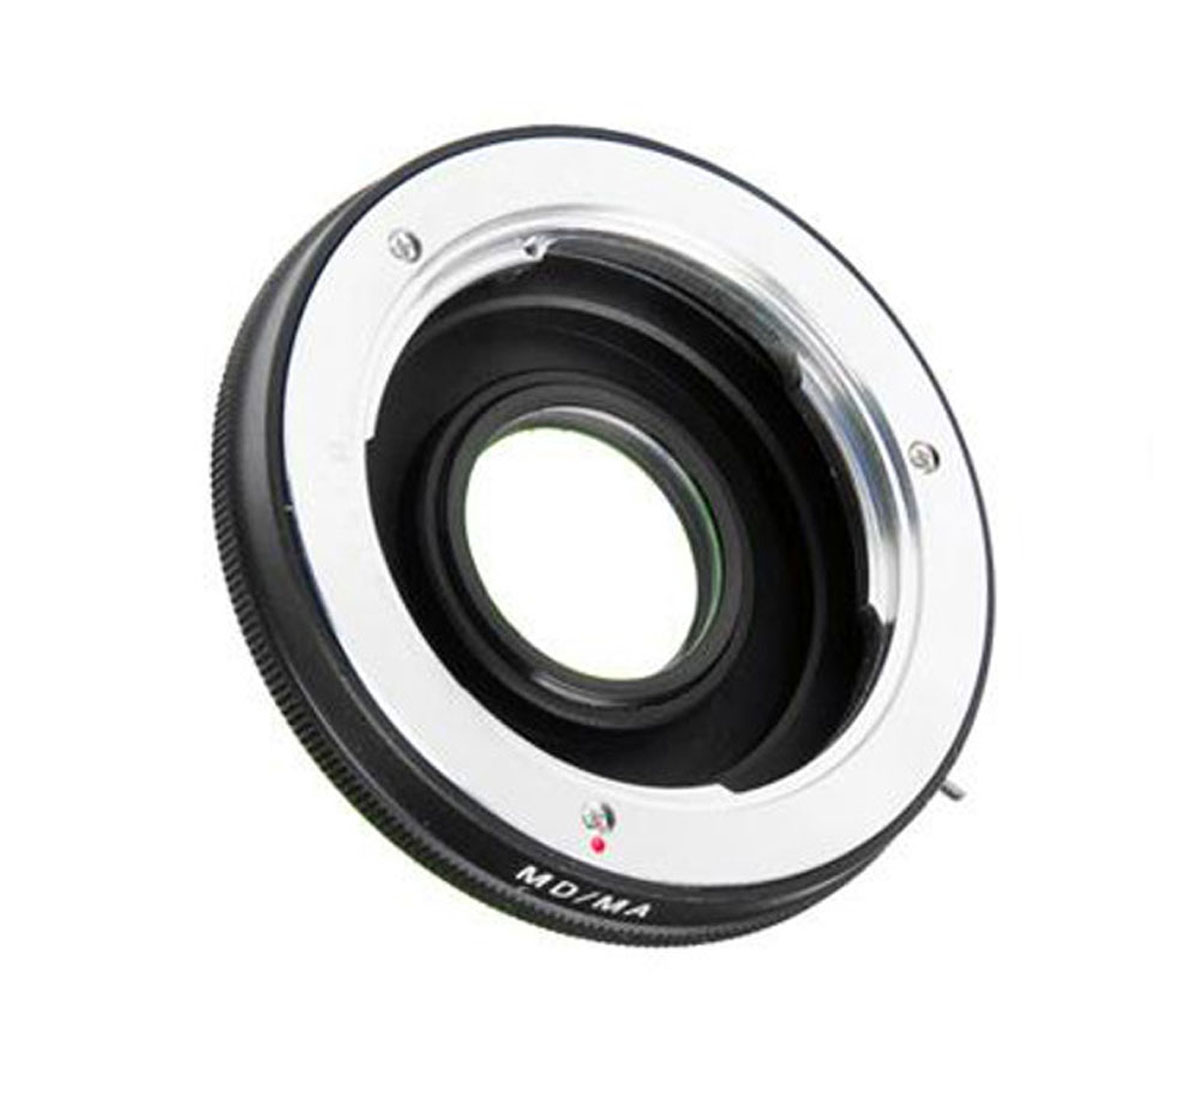 Minolta SR-Objektive - Nikon Adapter + Korrektur Linse